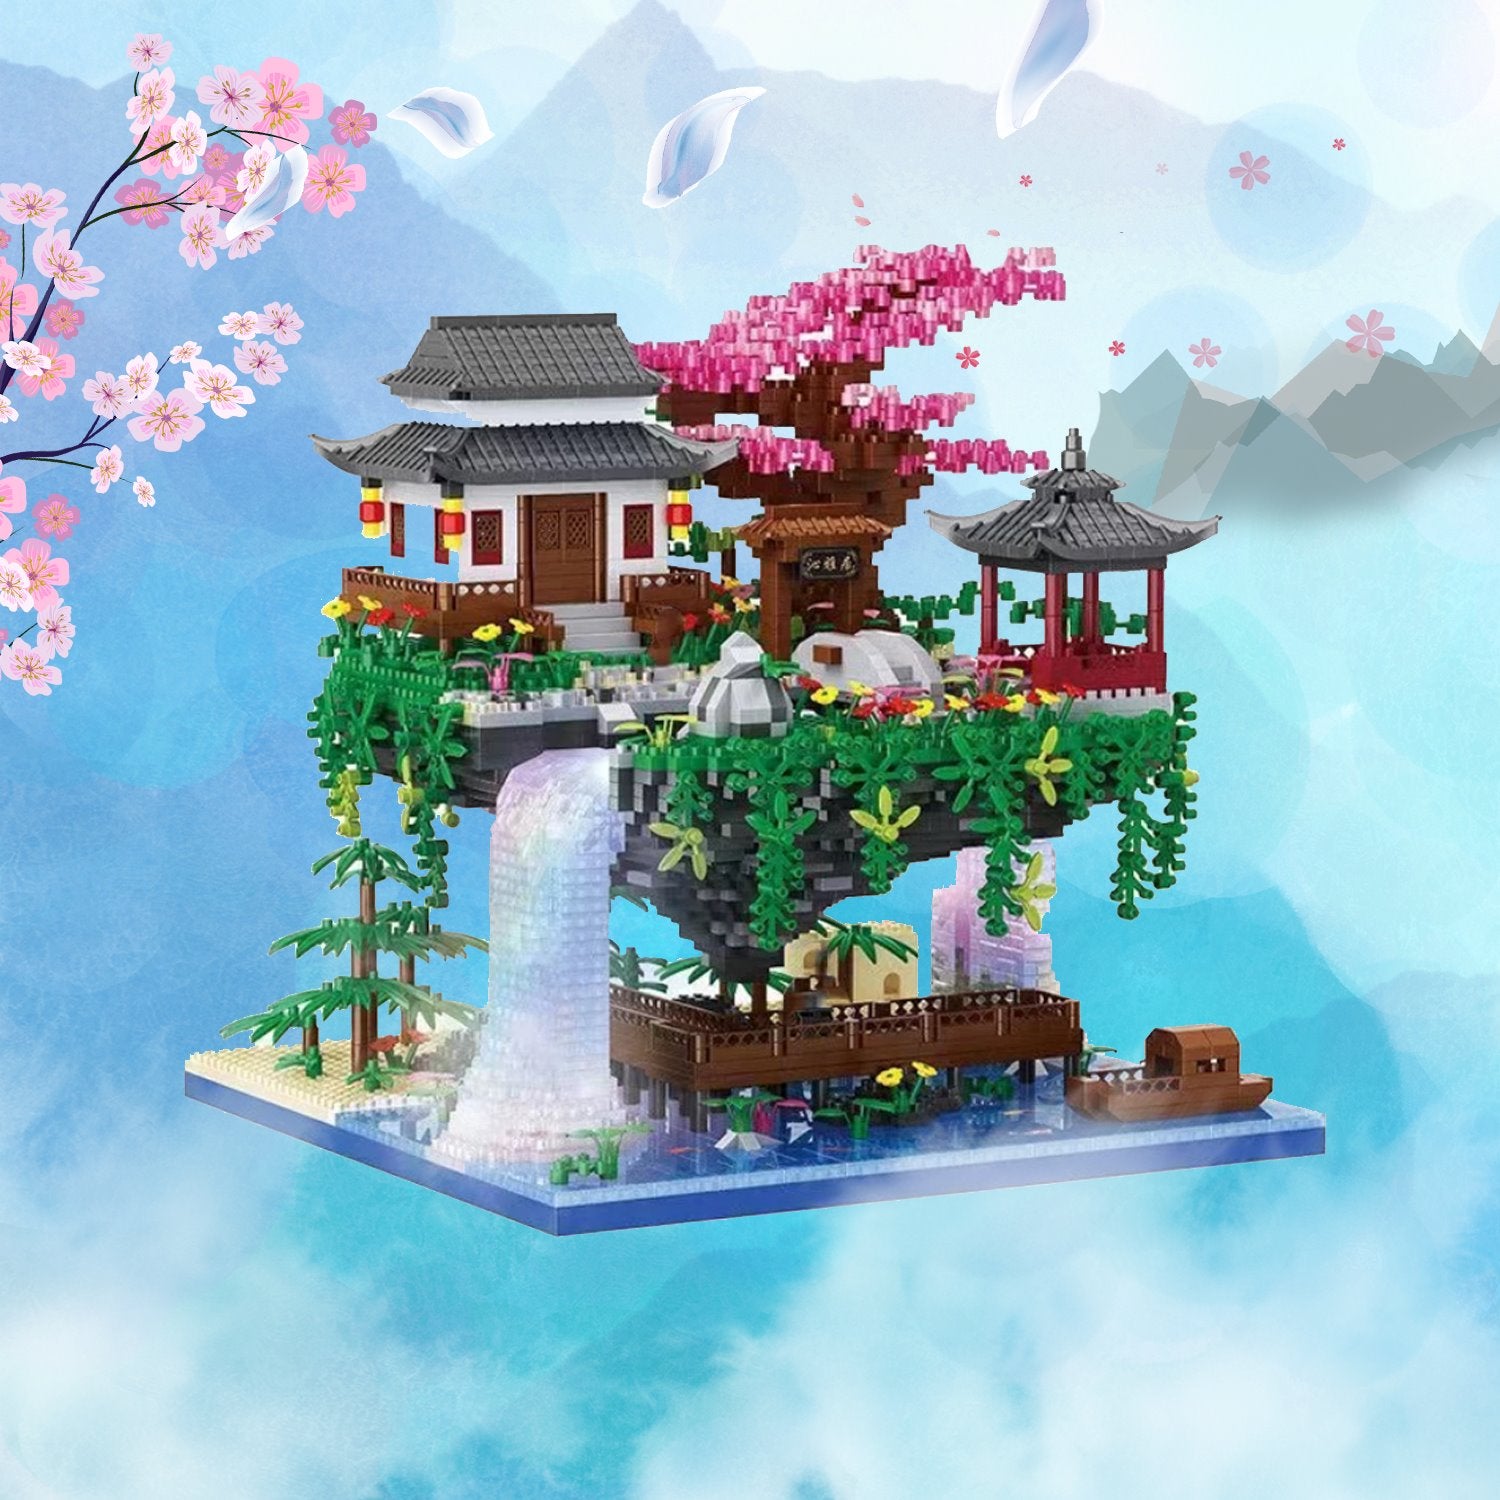 Minecraft: How To Build a Simple Cherry Blossom Pagoda 